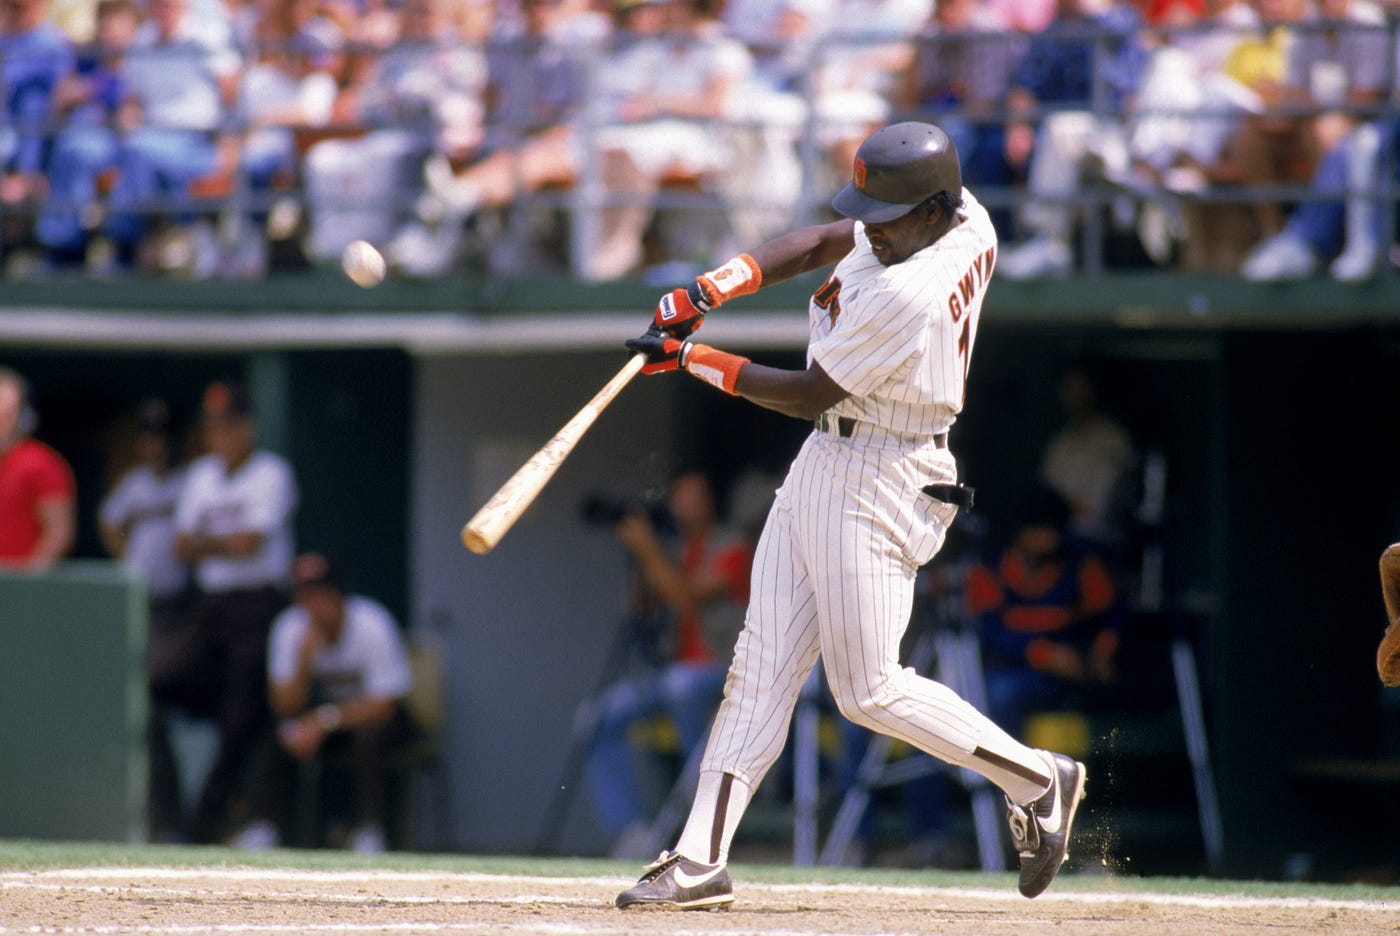 Baseball In Pics - Tony Gwynn up to bat during the 1984 World Series